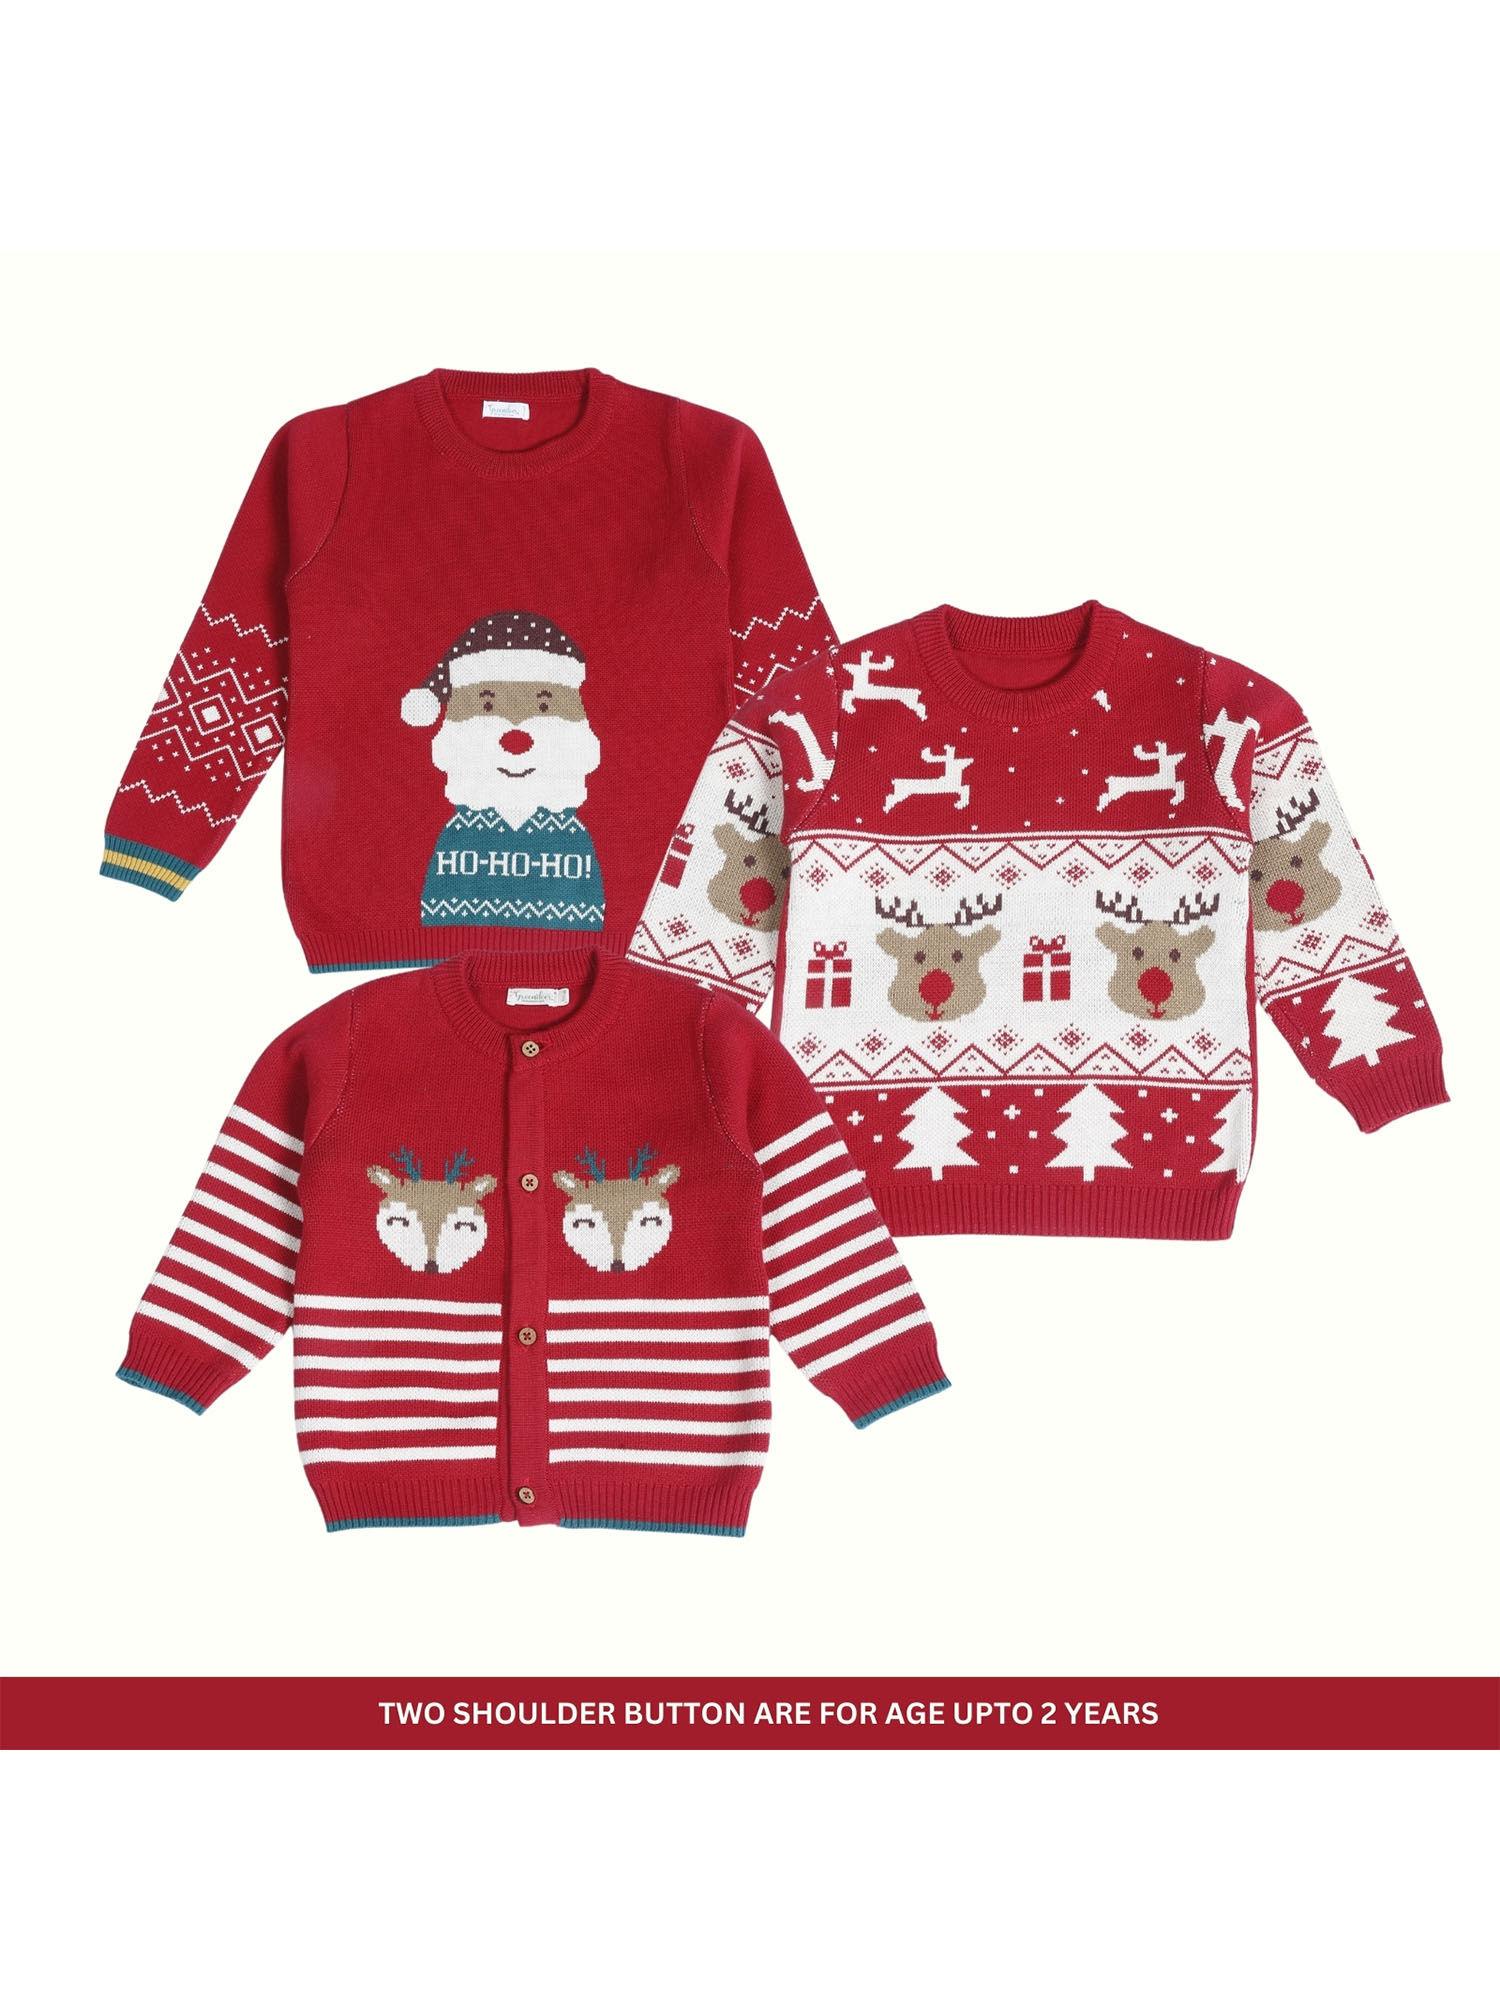 santa-jaunty-or-joyful-reindeer-3-sweaters-(set-of-3)